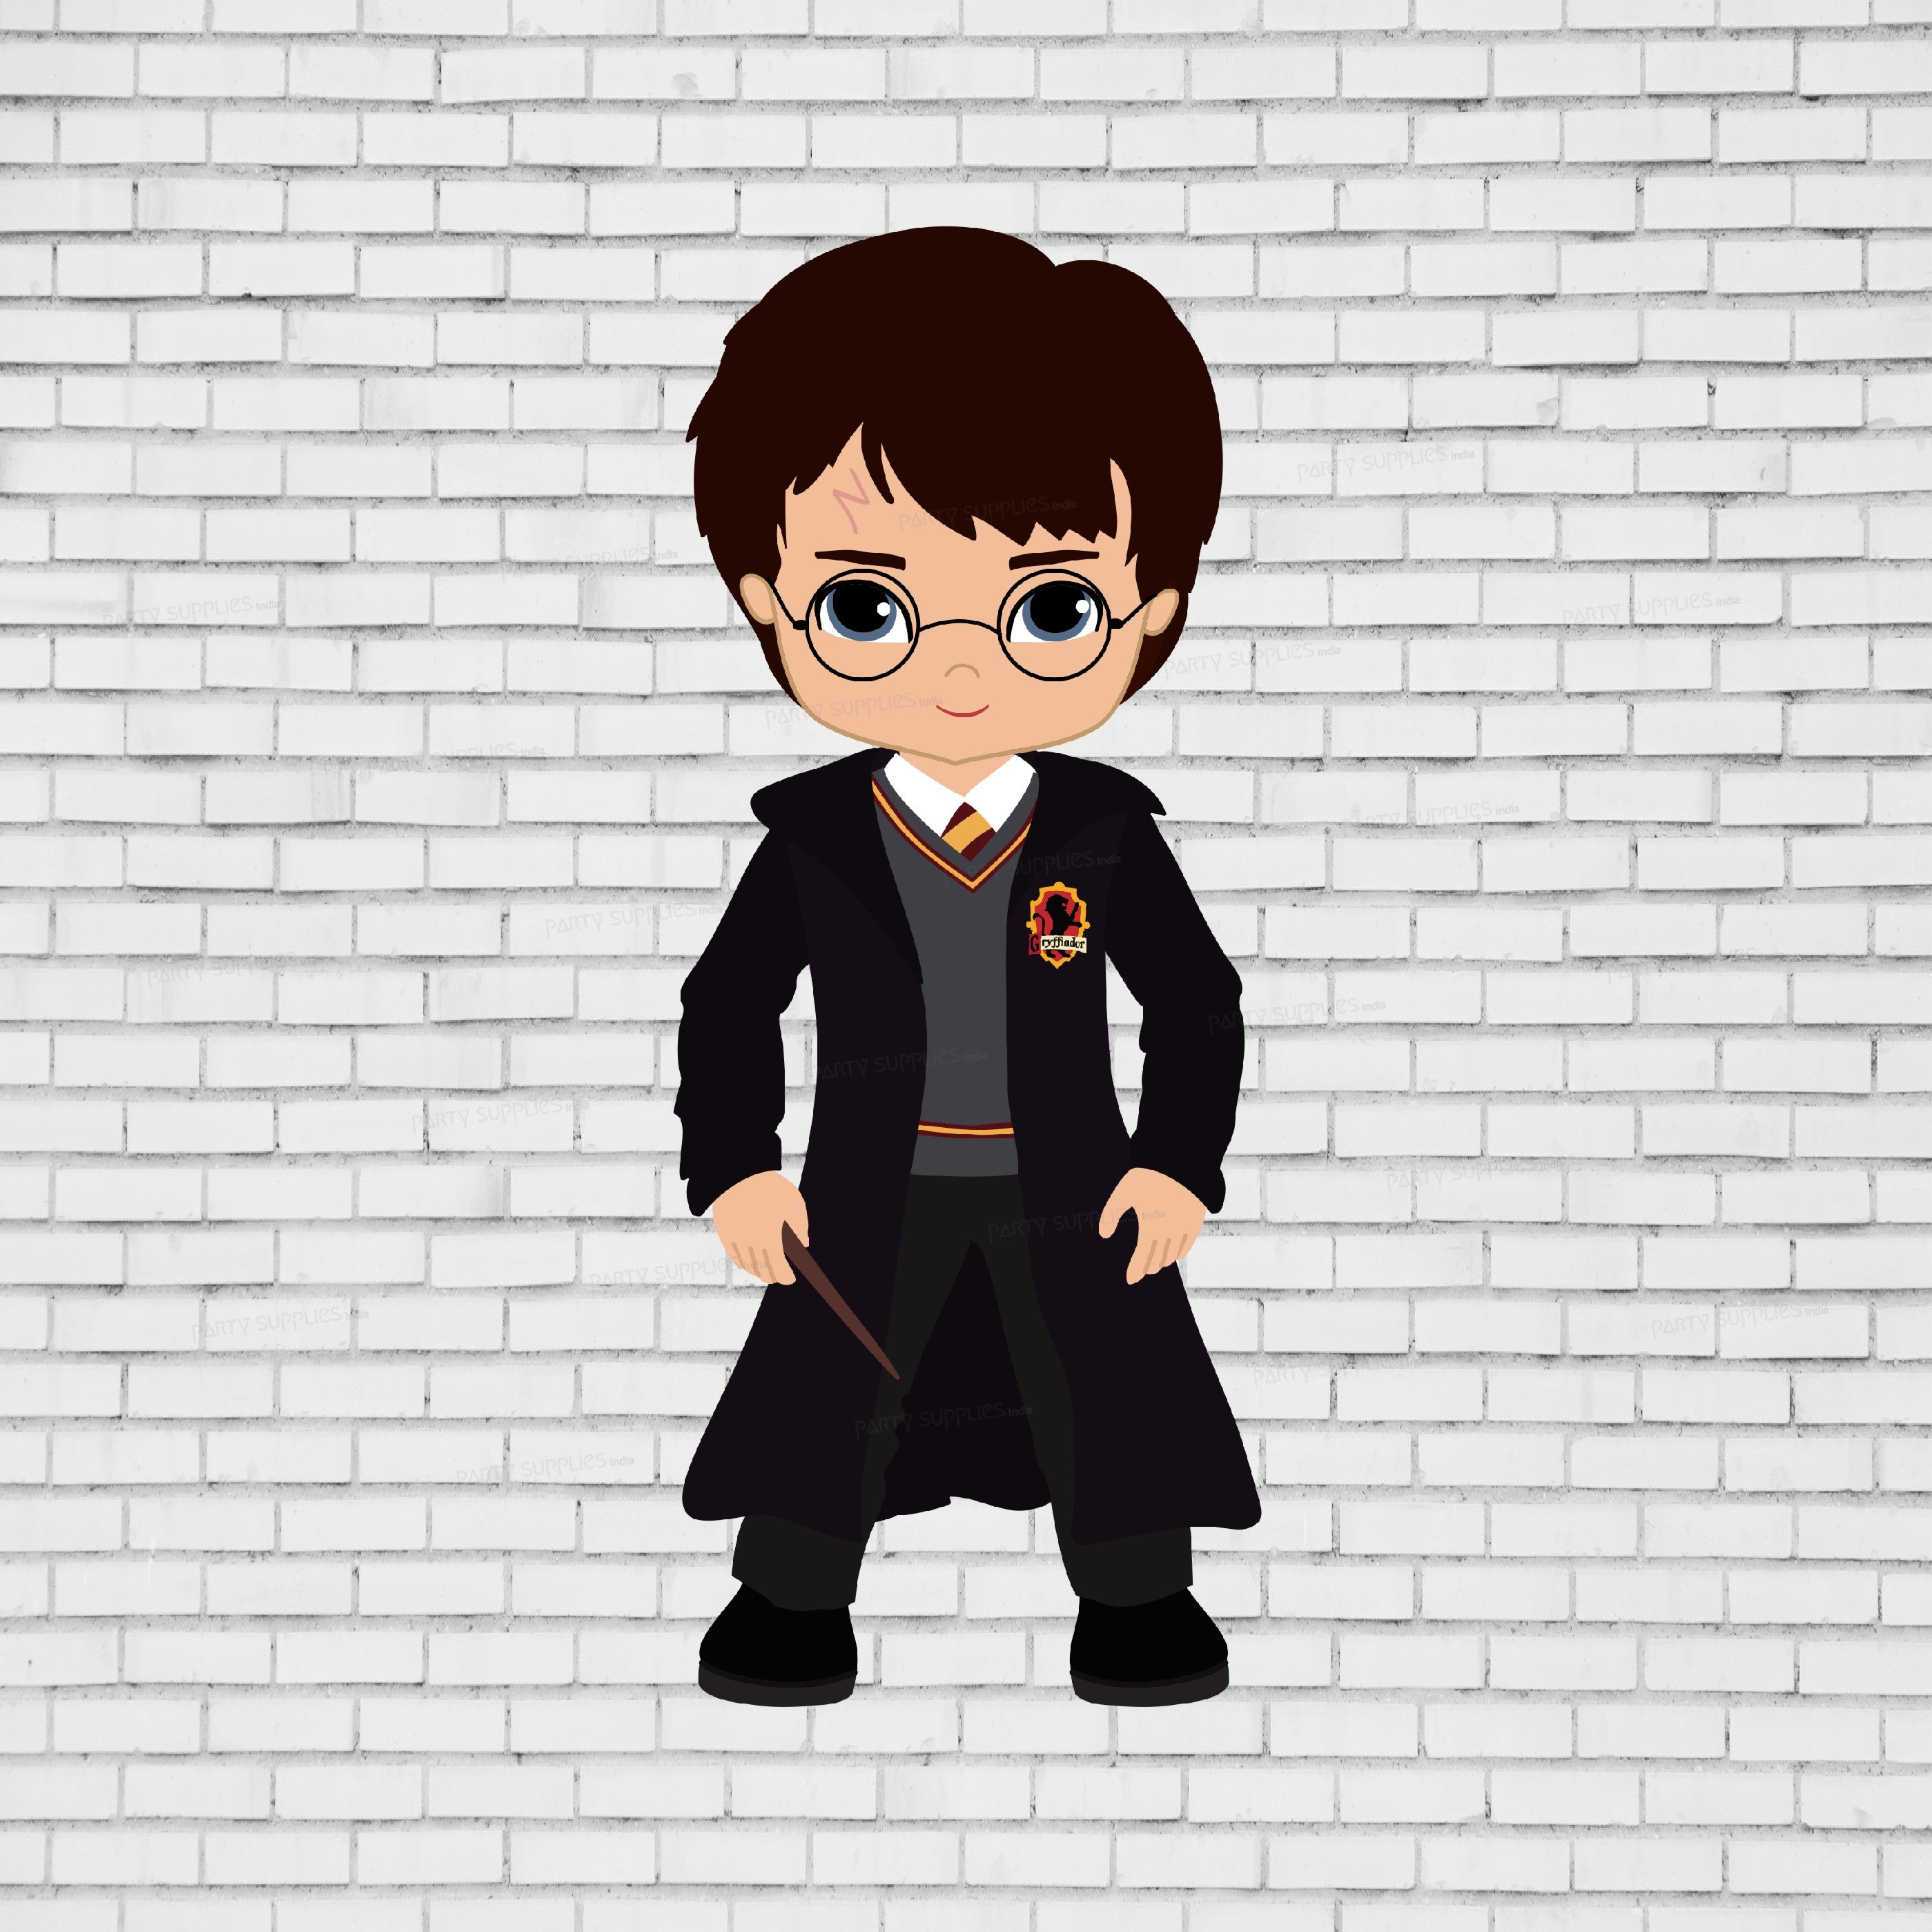 Harry Potter Theme Cutout - 07